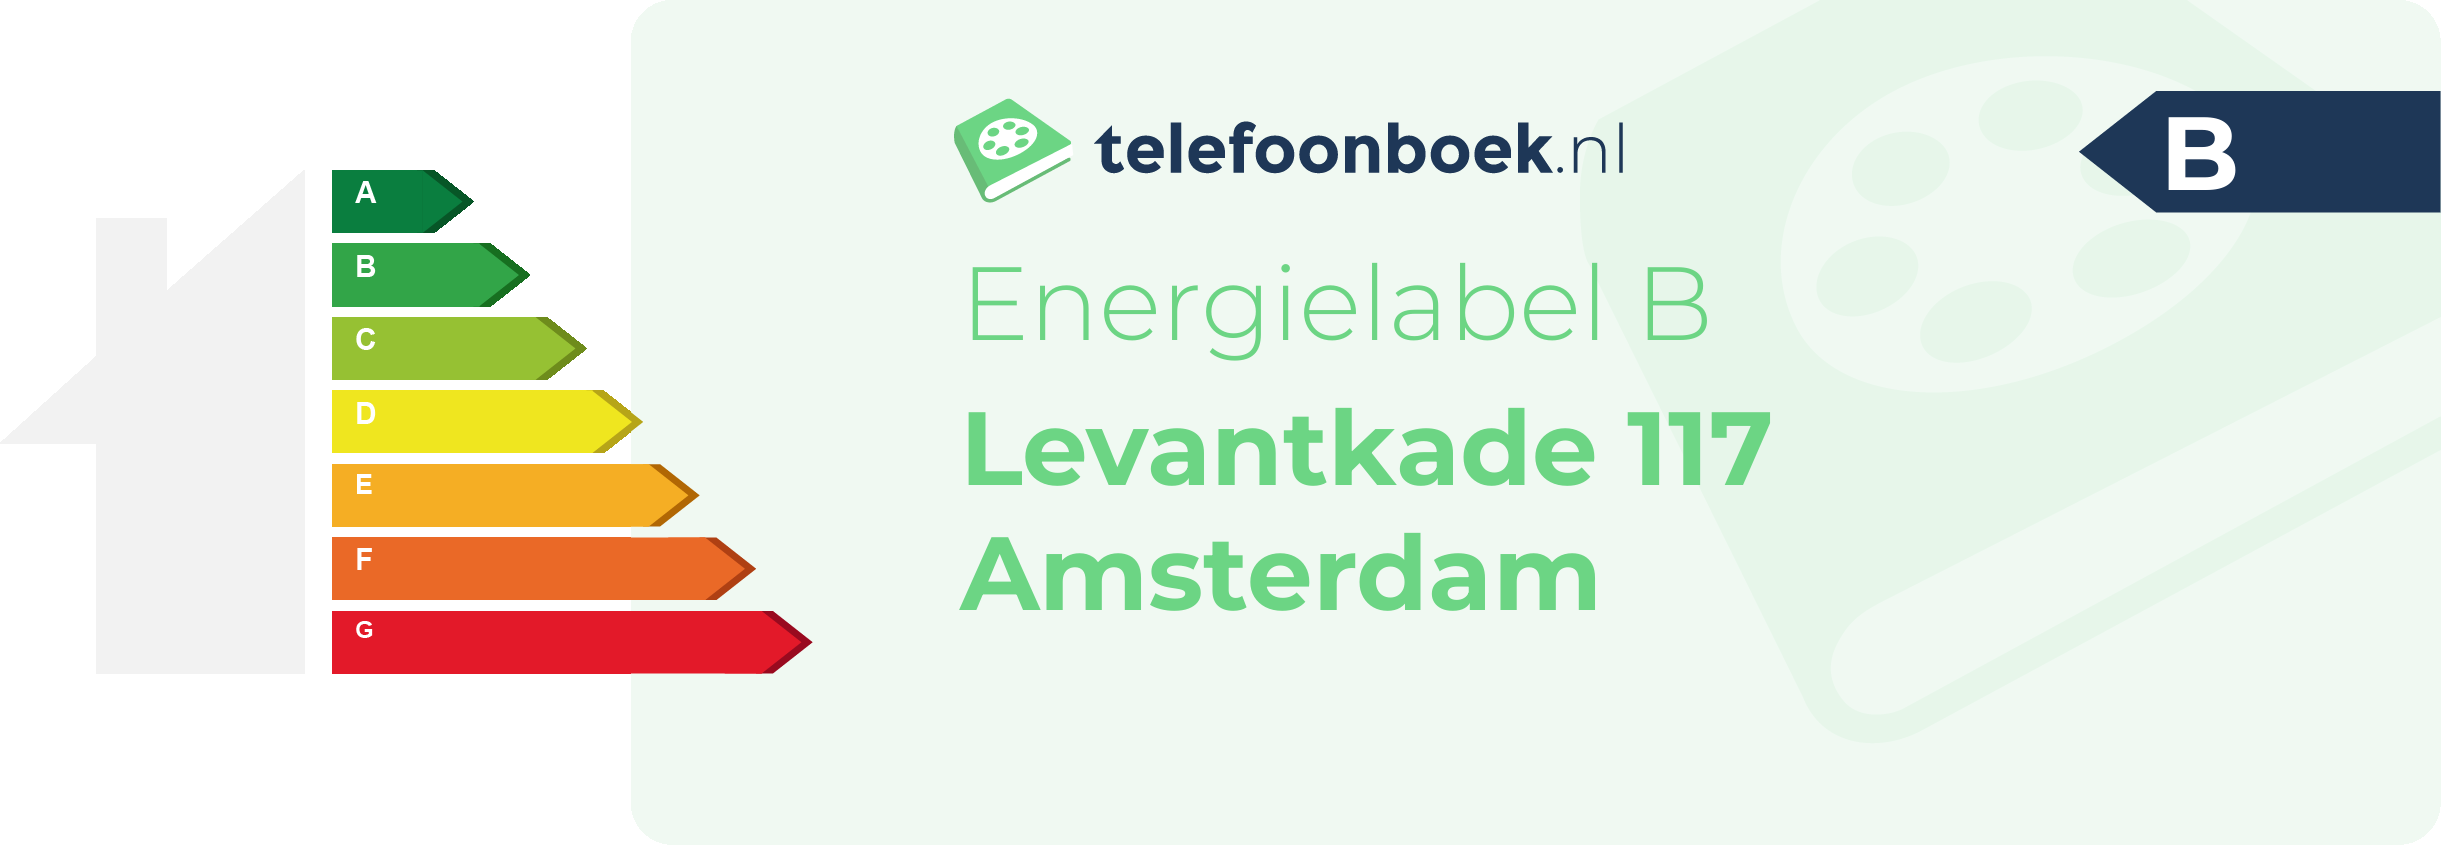 Energielabel Levantkade 117 Amsterdam